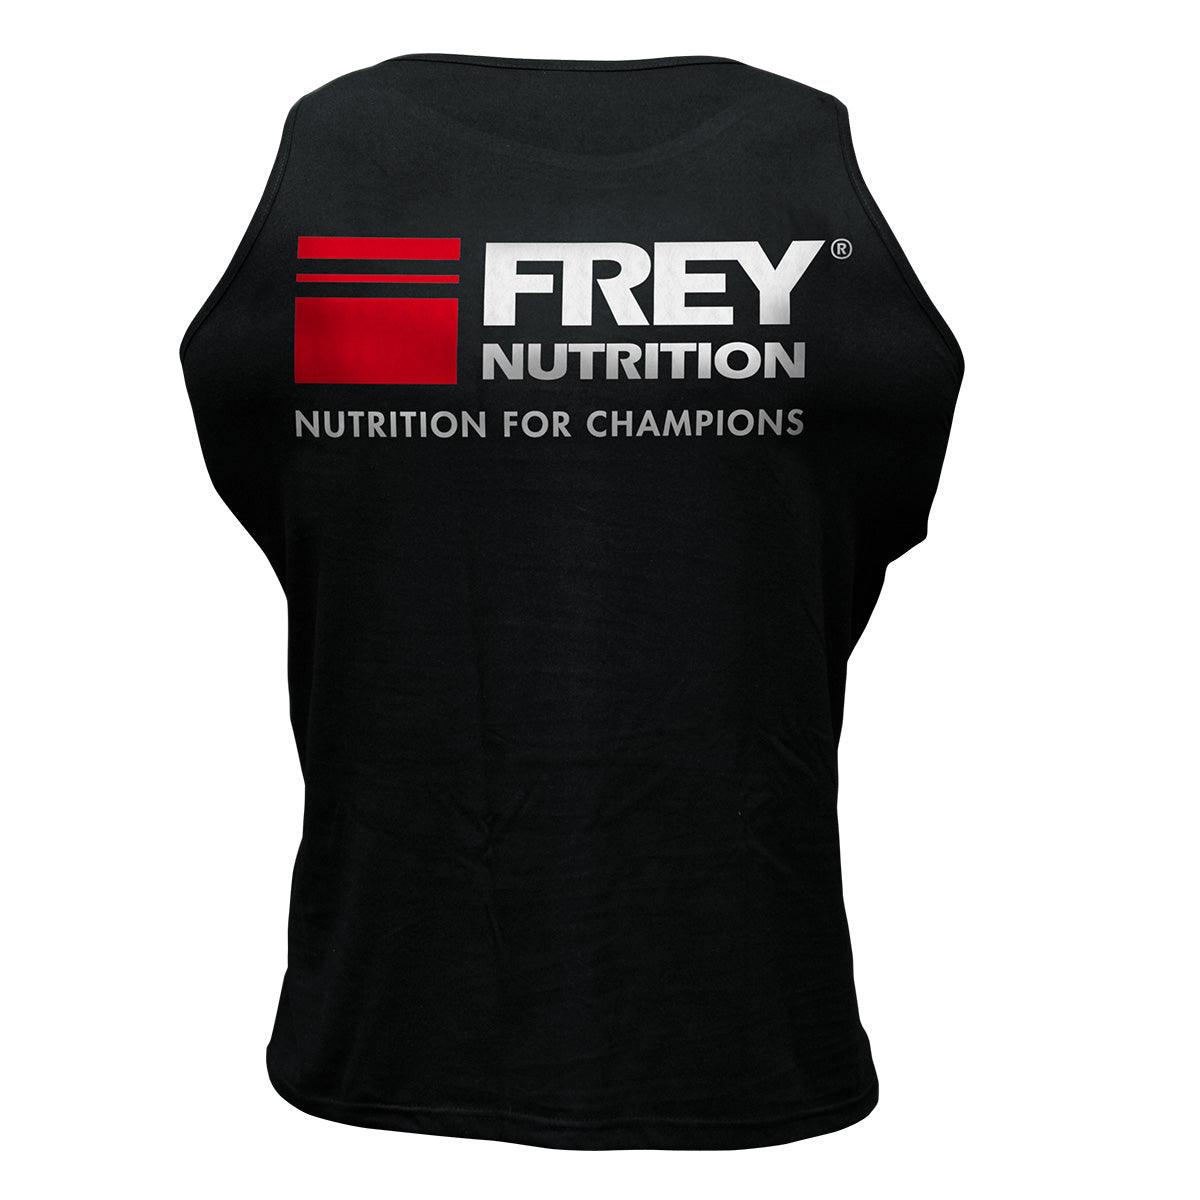 FREY MUSCLE SHIRT - Demo-Frey-Nutrition